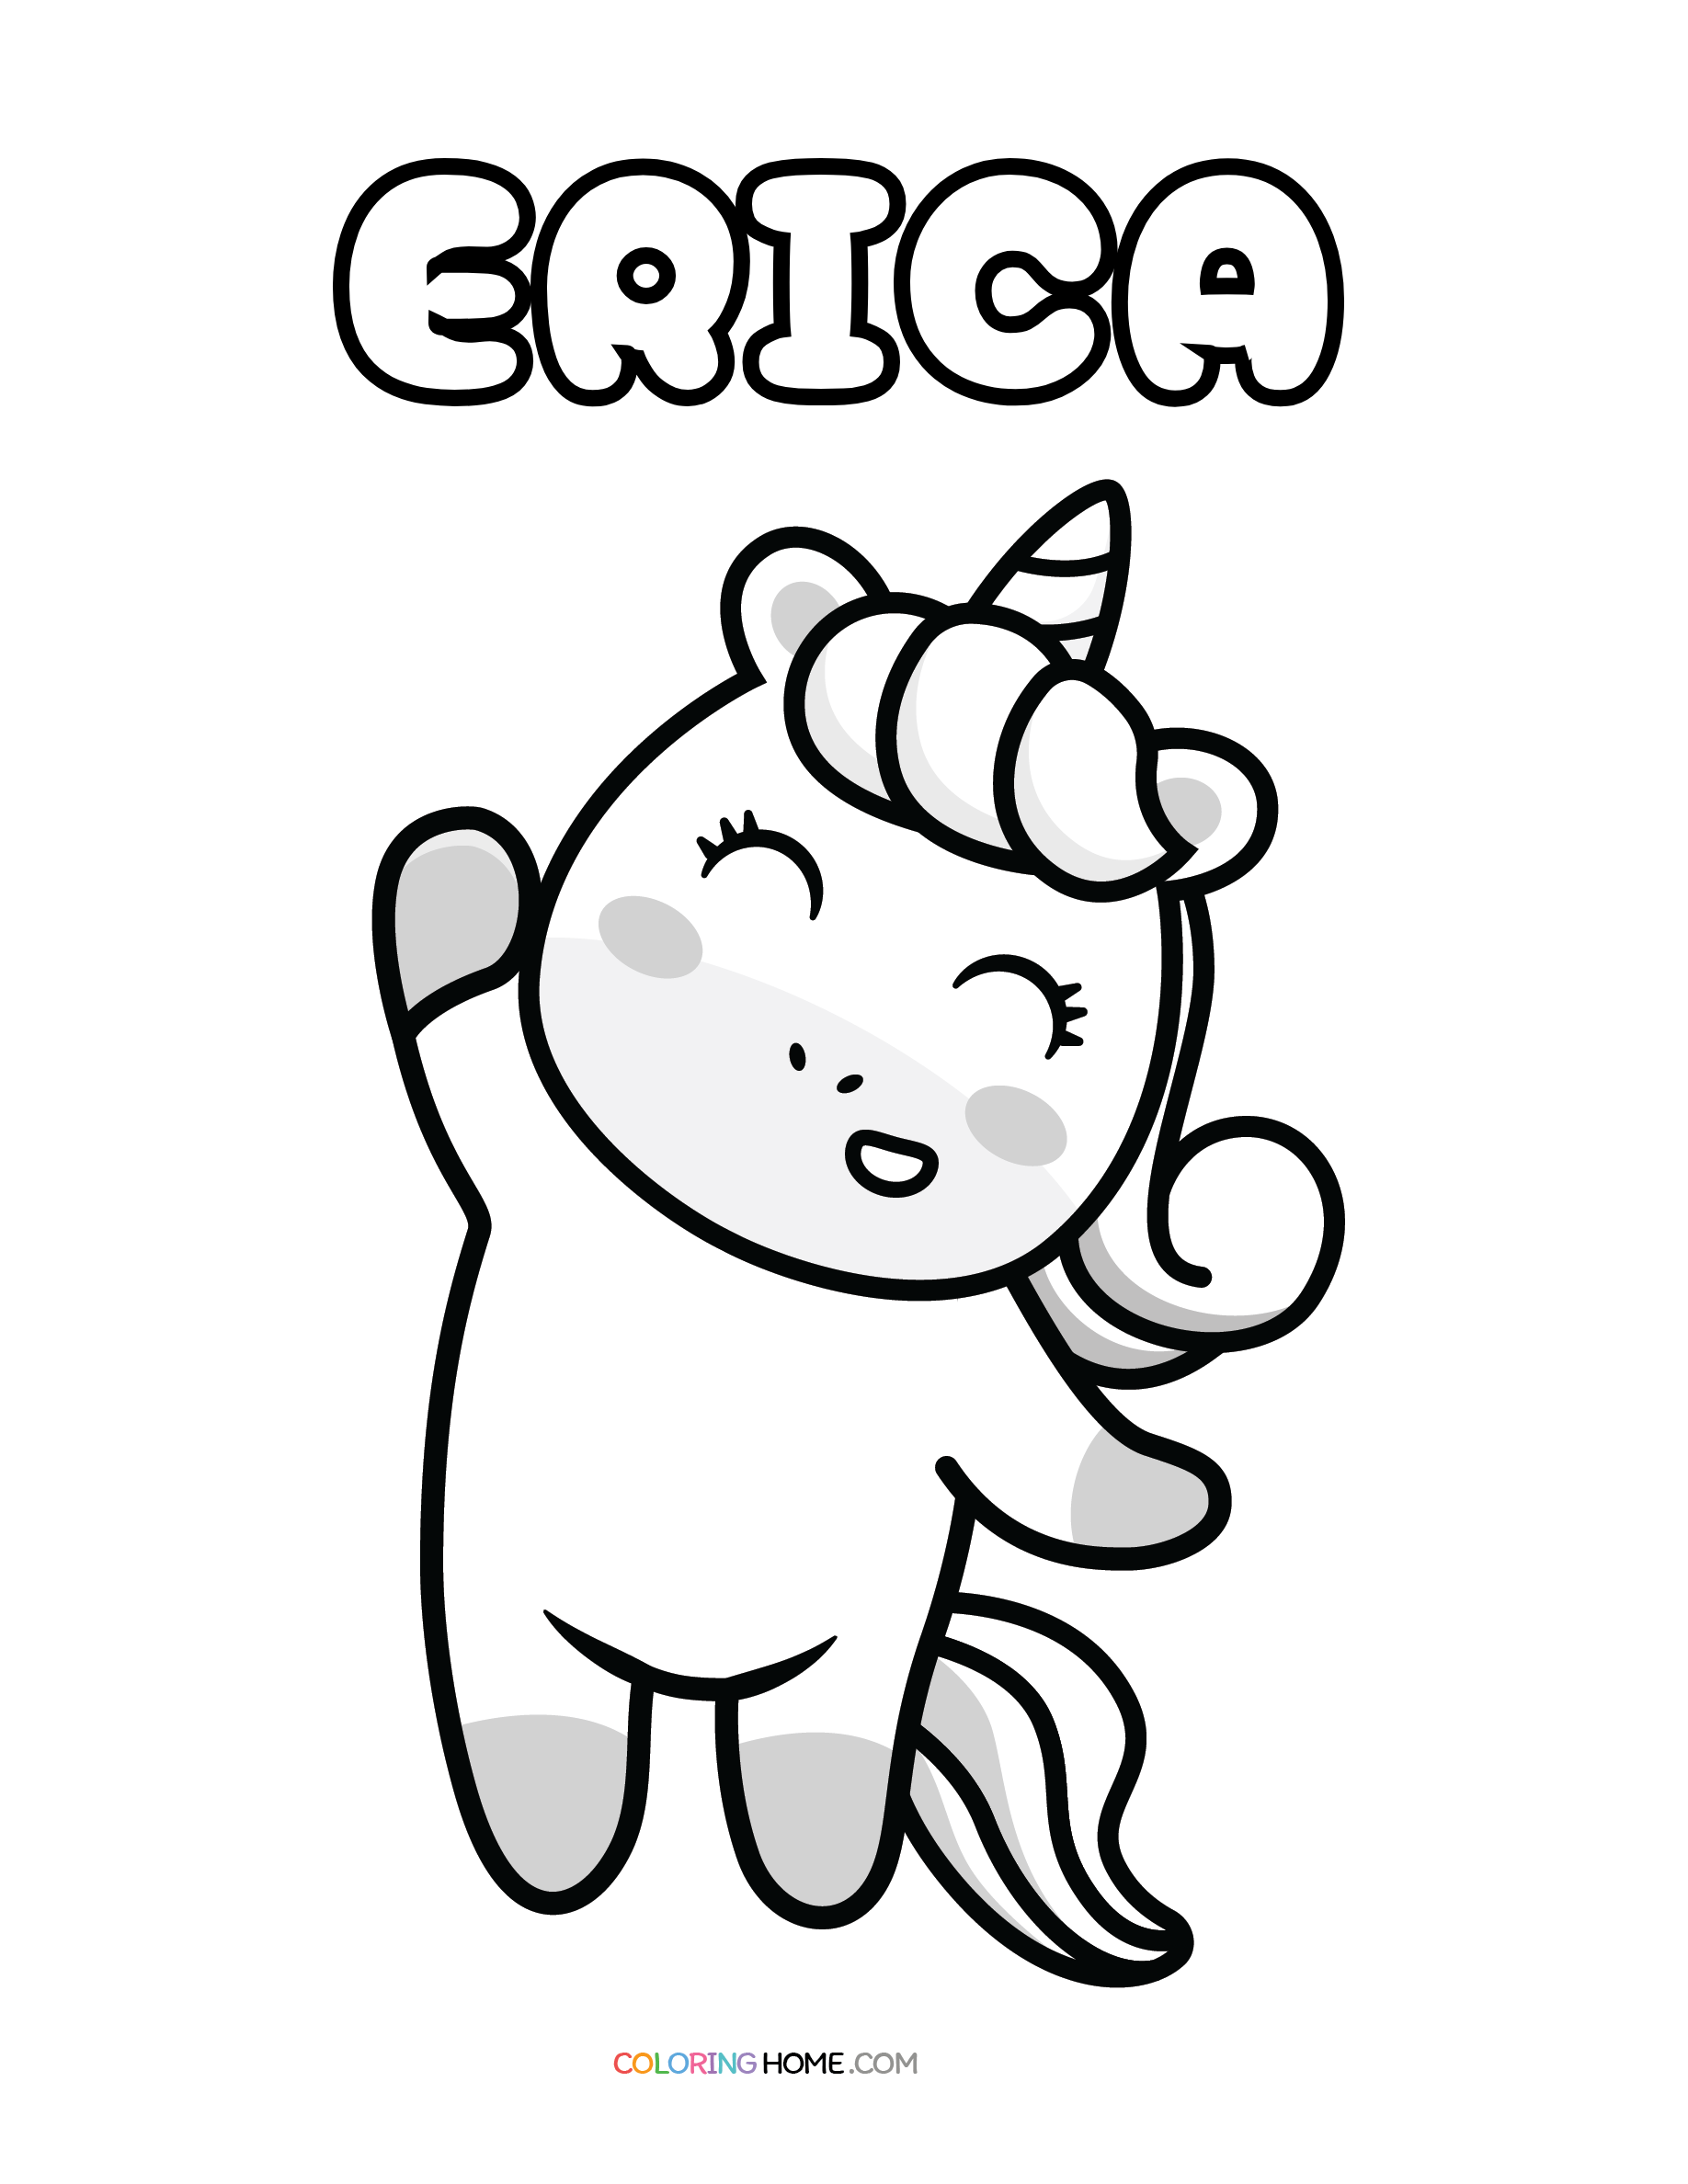 Erica unicorn coloring page